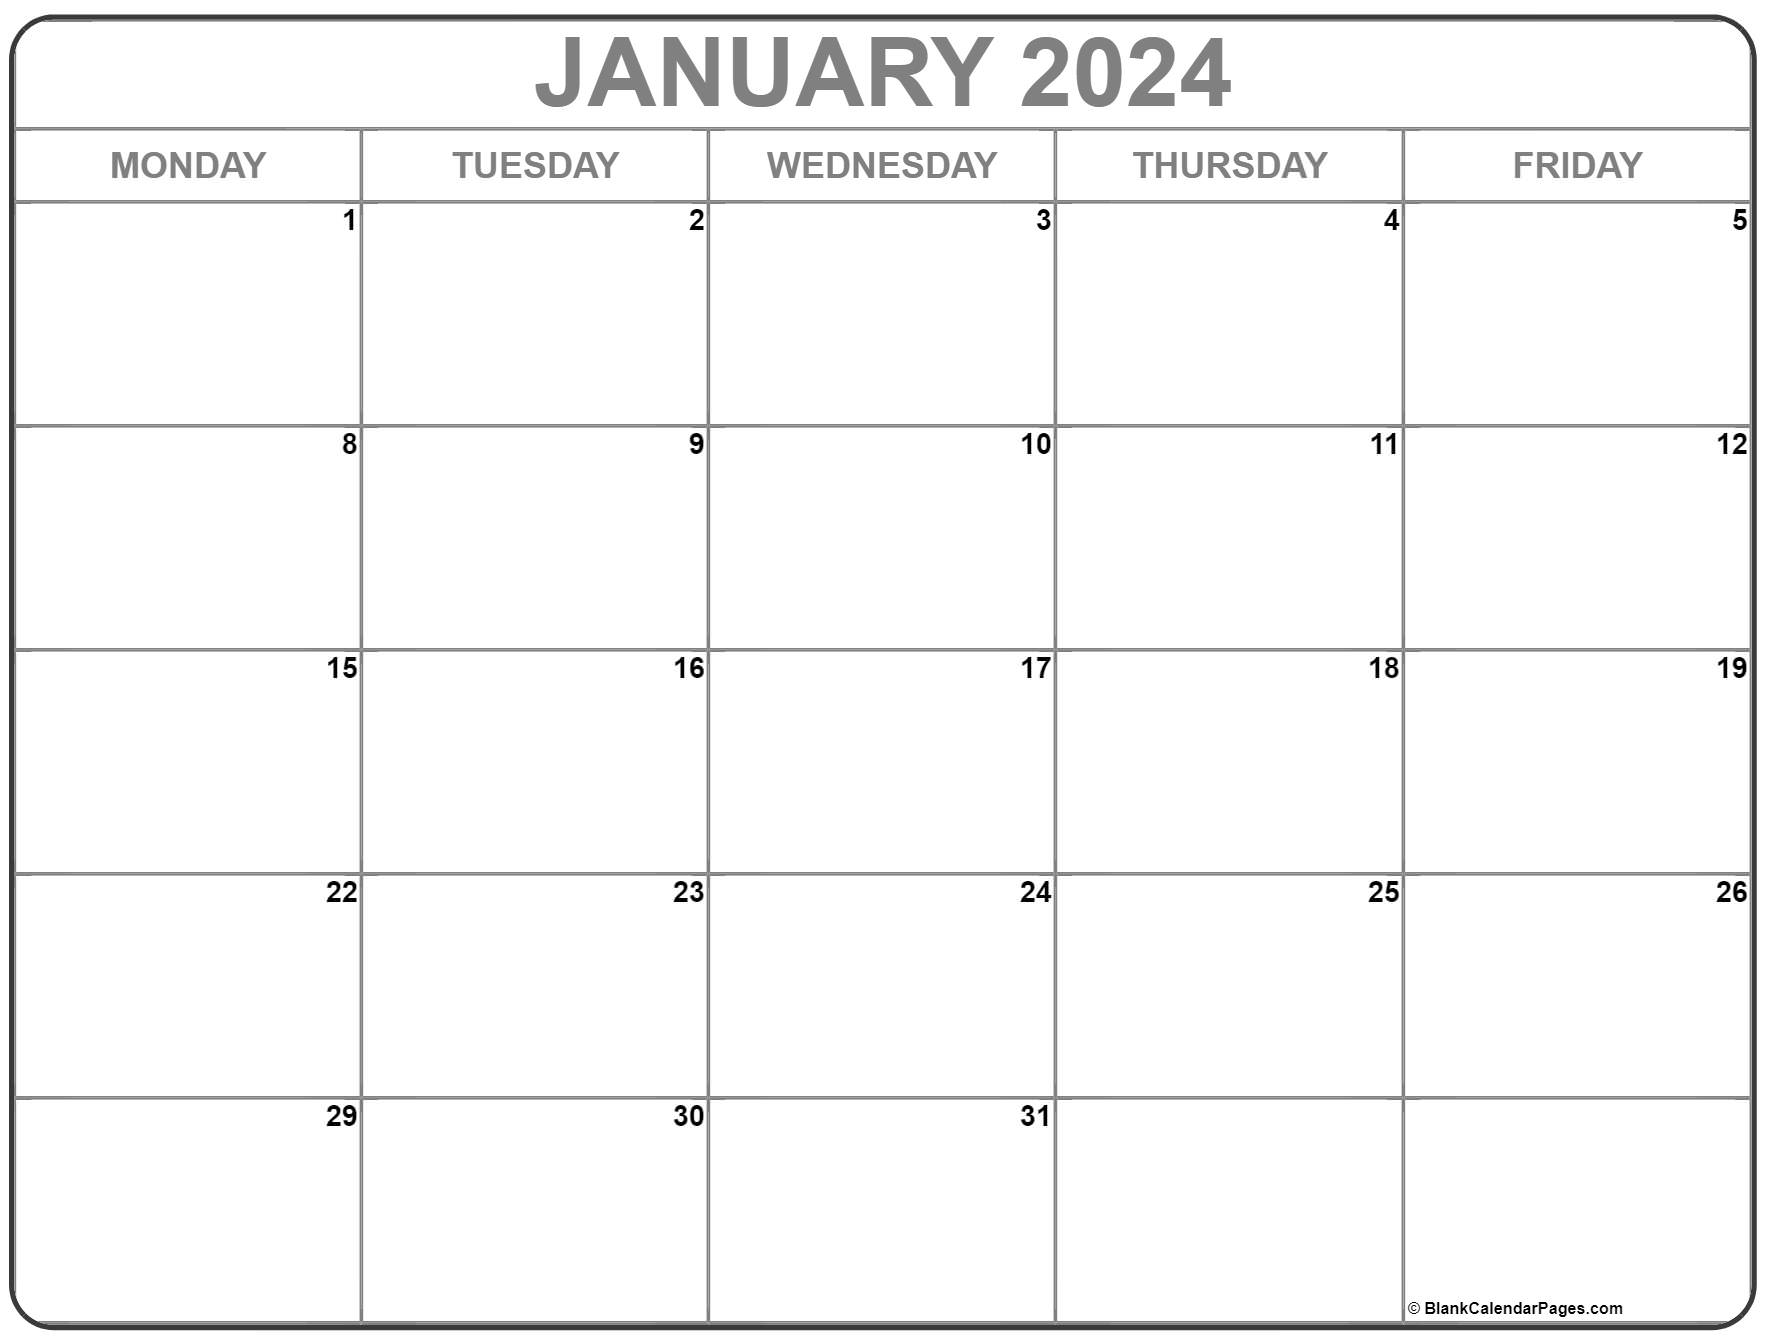 January 2024 Empty Calendar New Awasome Incredible January 2024 Calendar Blank